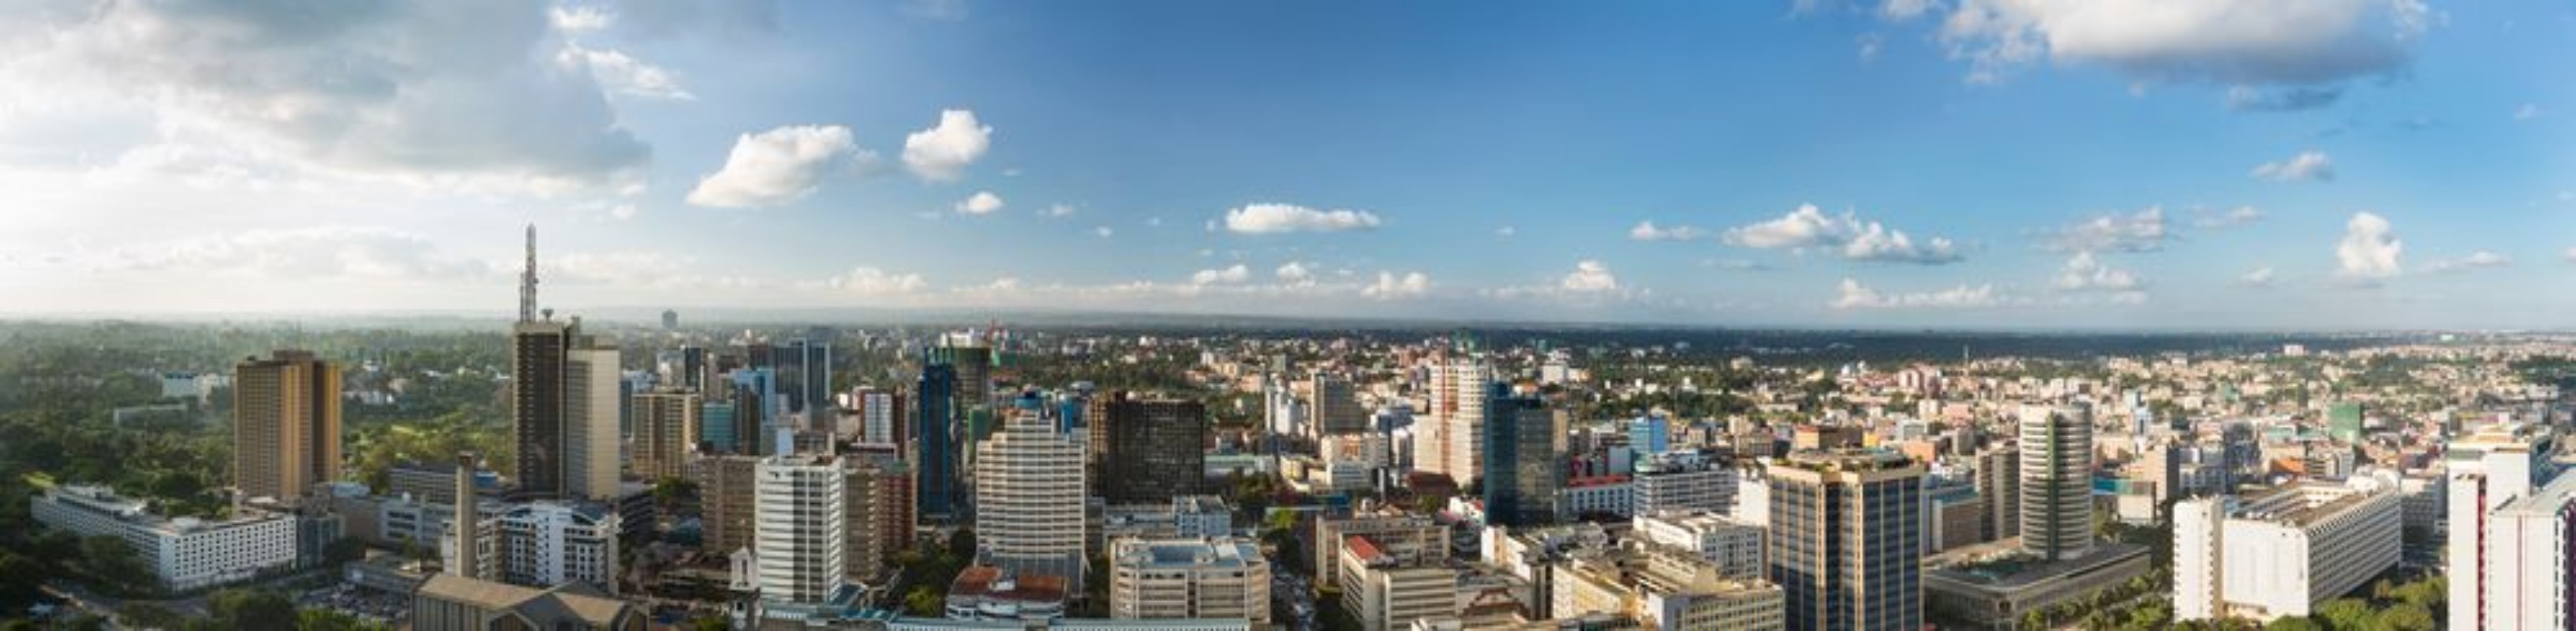 Image de Nairobi Center Panorama Kenya